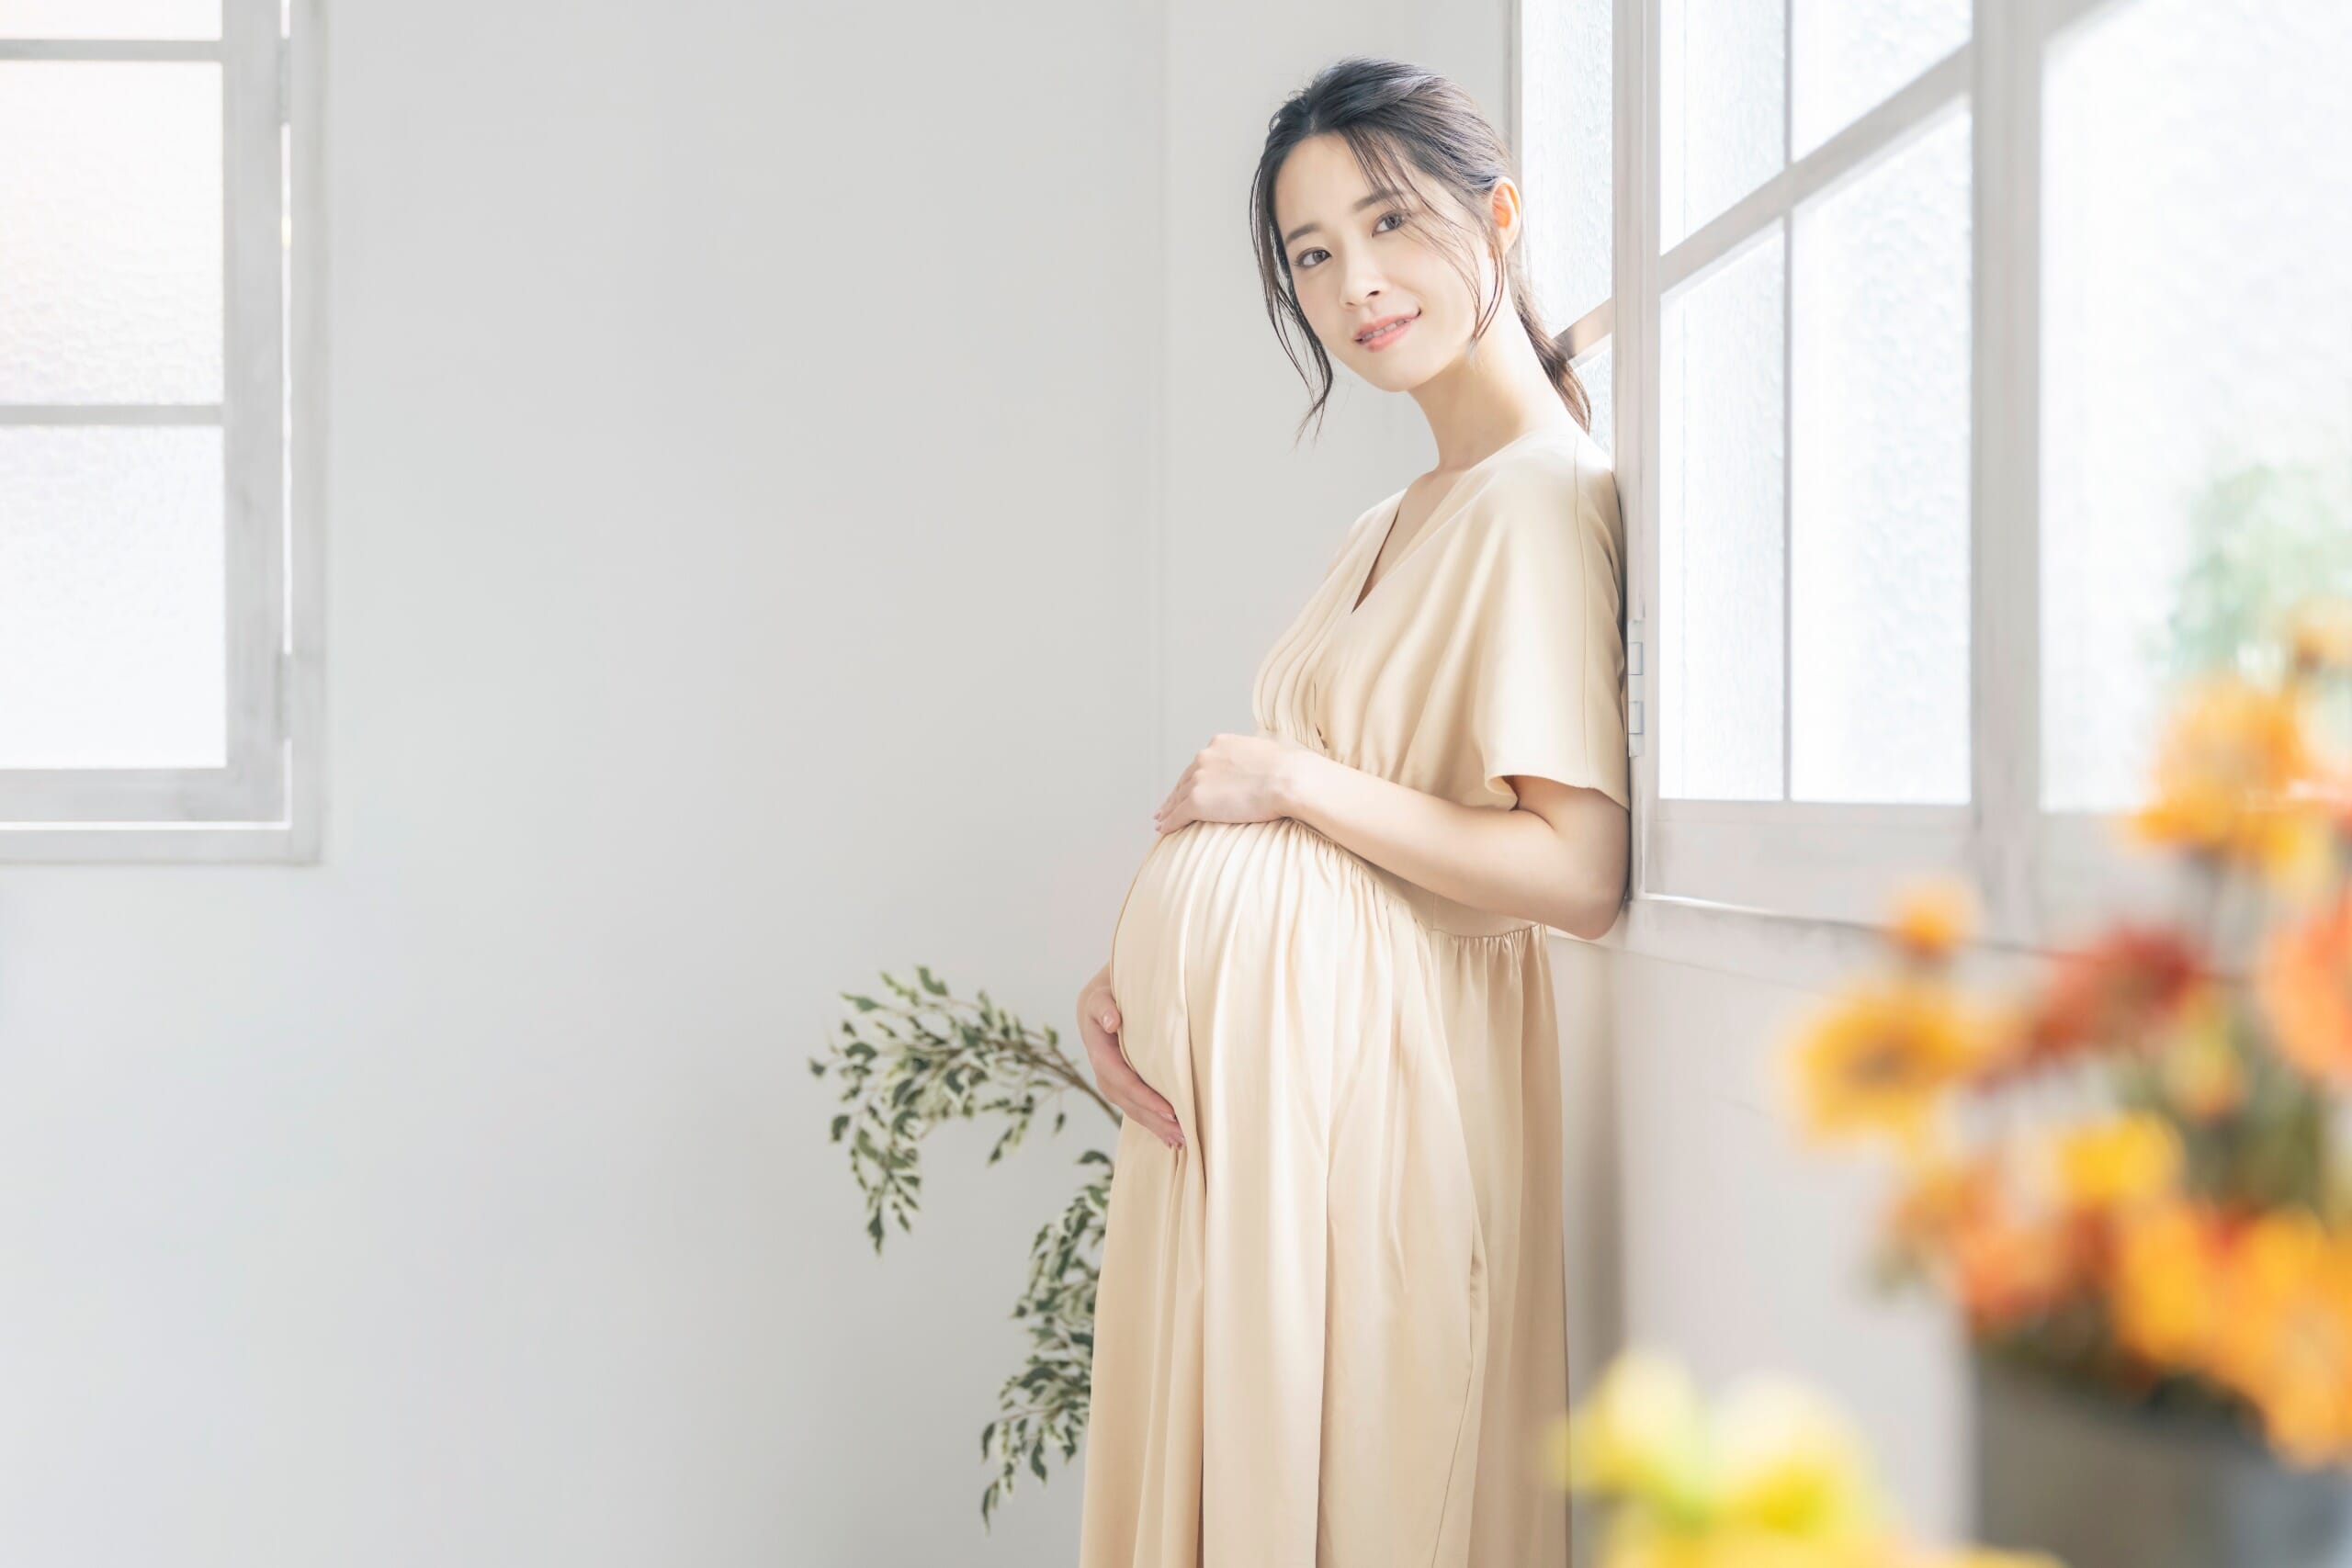 Maternity photoshoot tips and ideas - Adobe